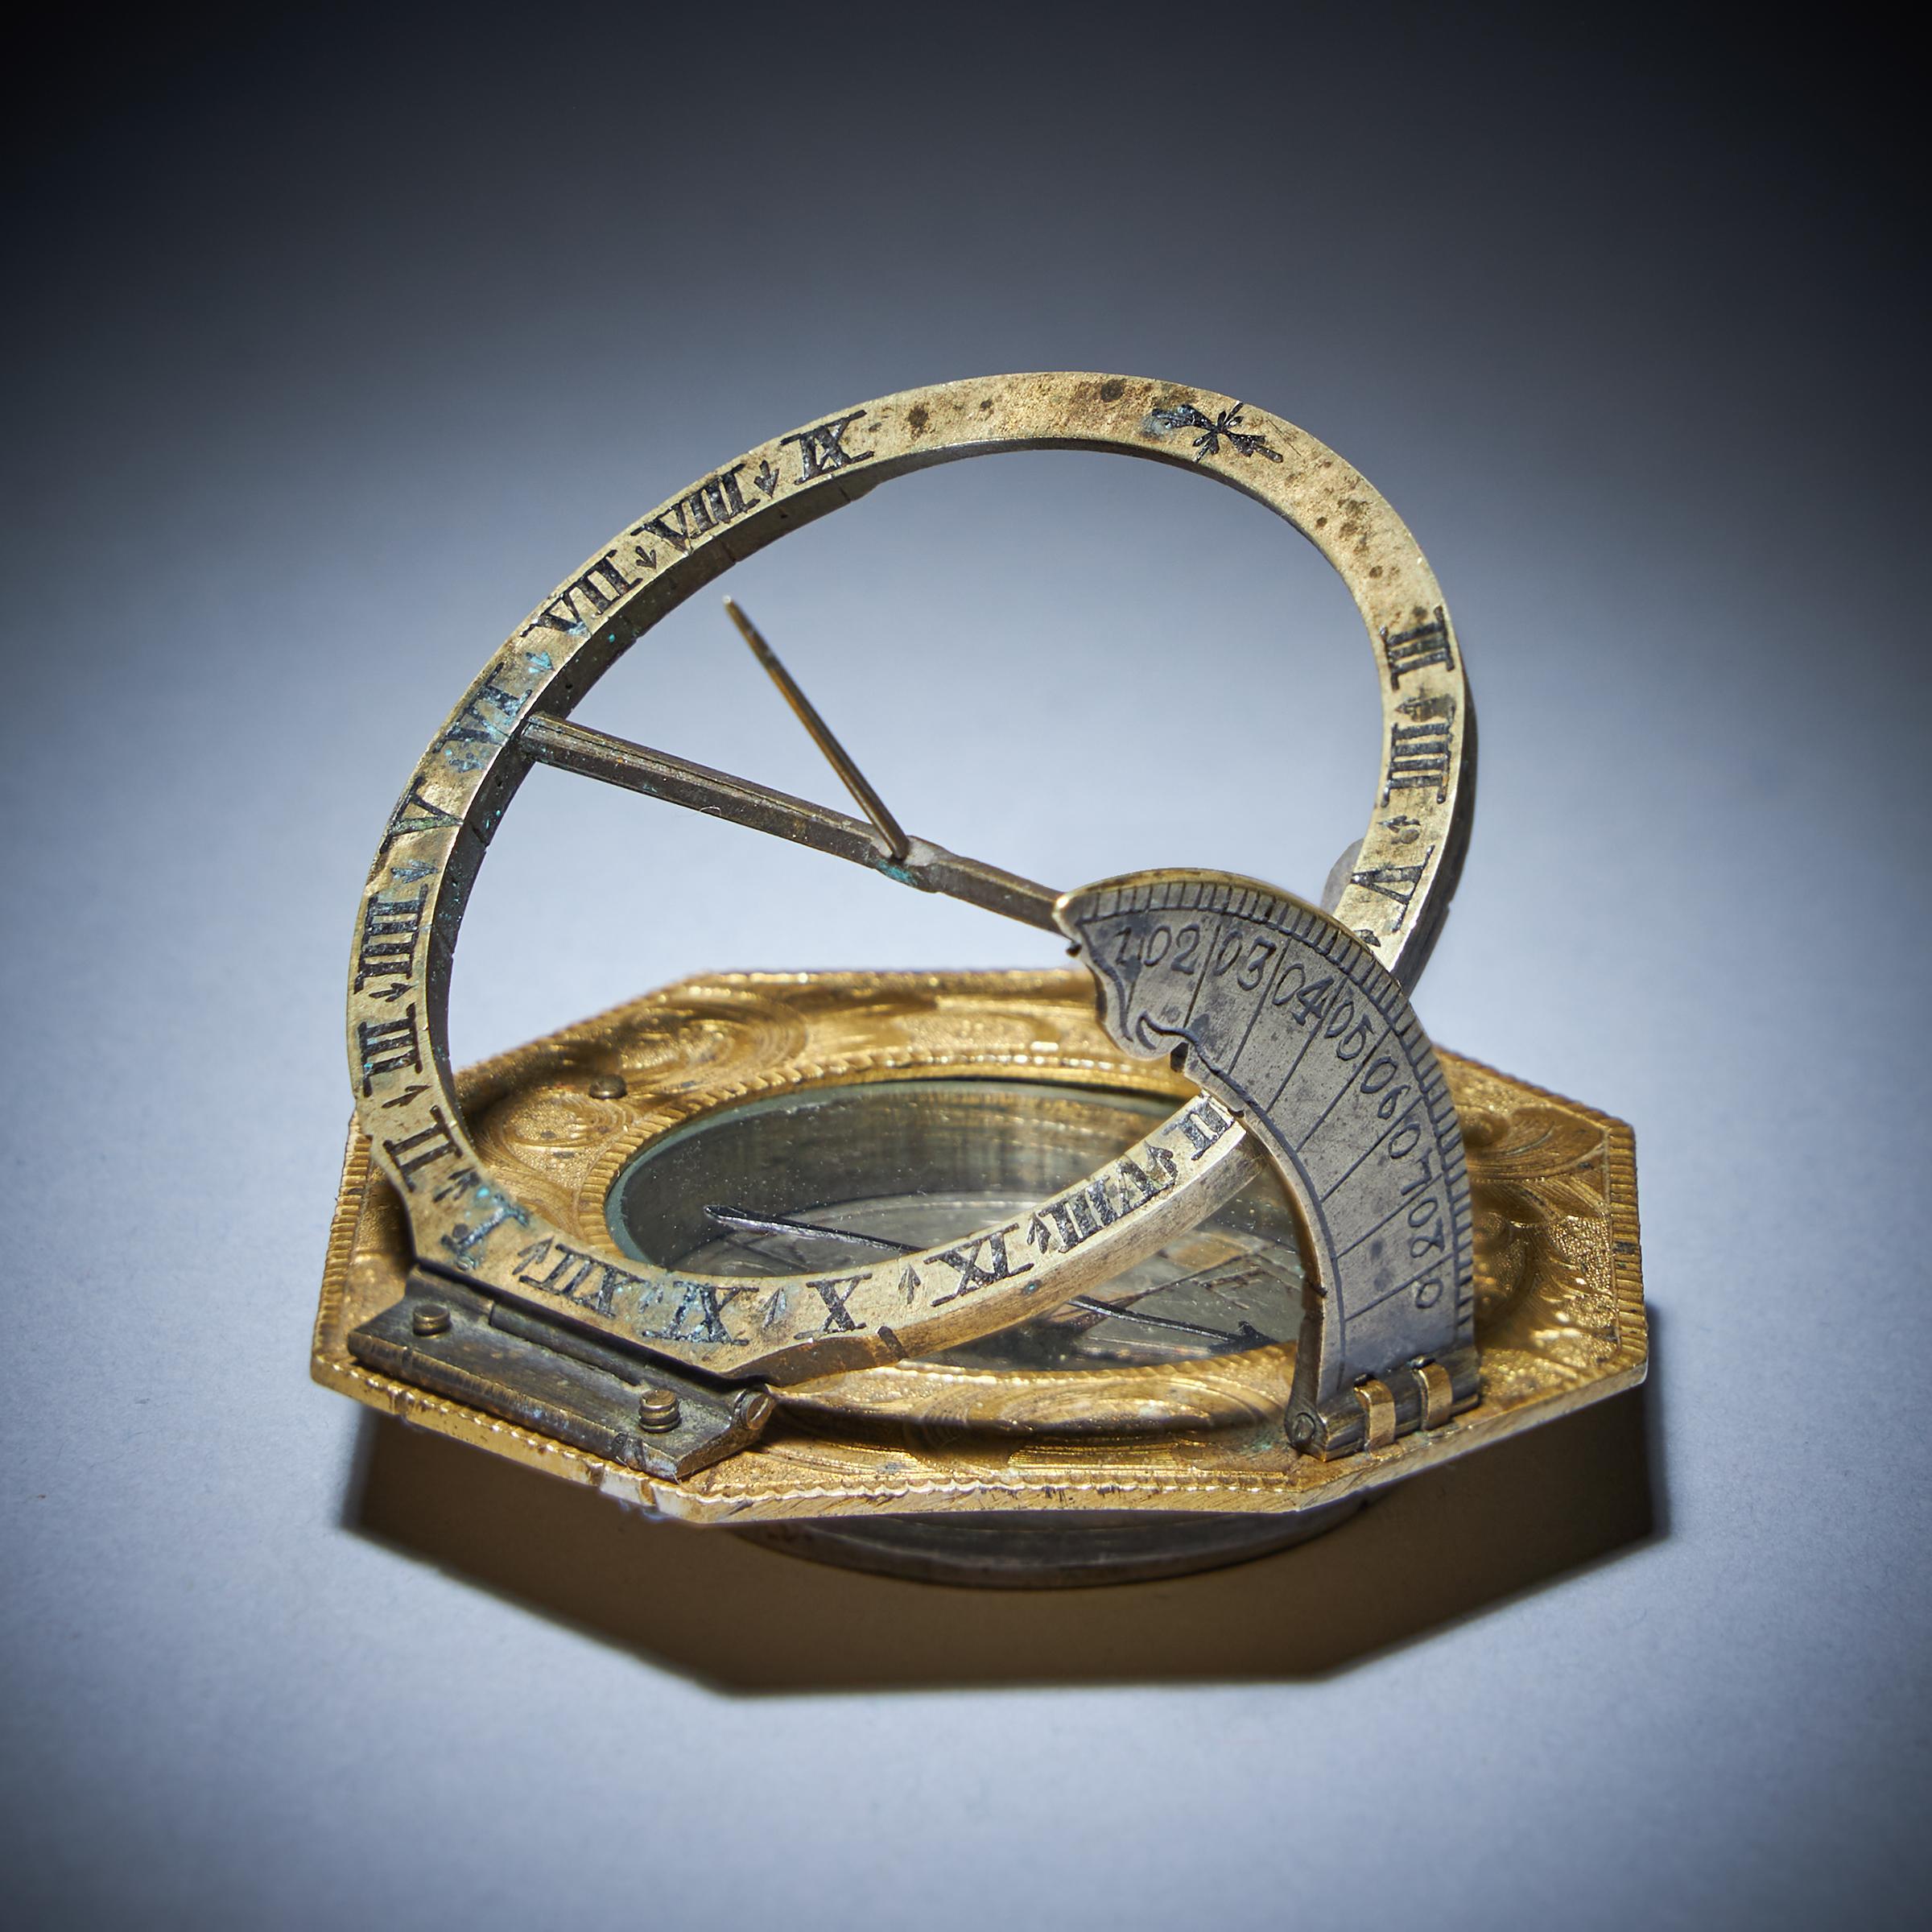 18 Century Equinoctial Pocket Sundial and Compass Ludwig Theodor